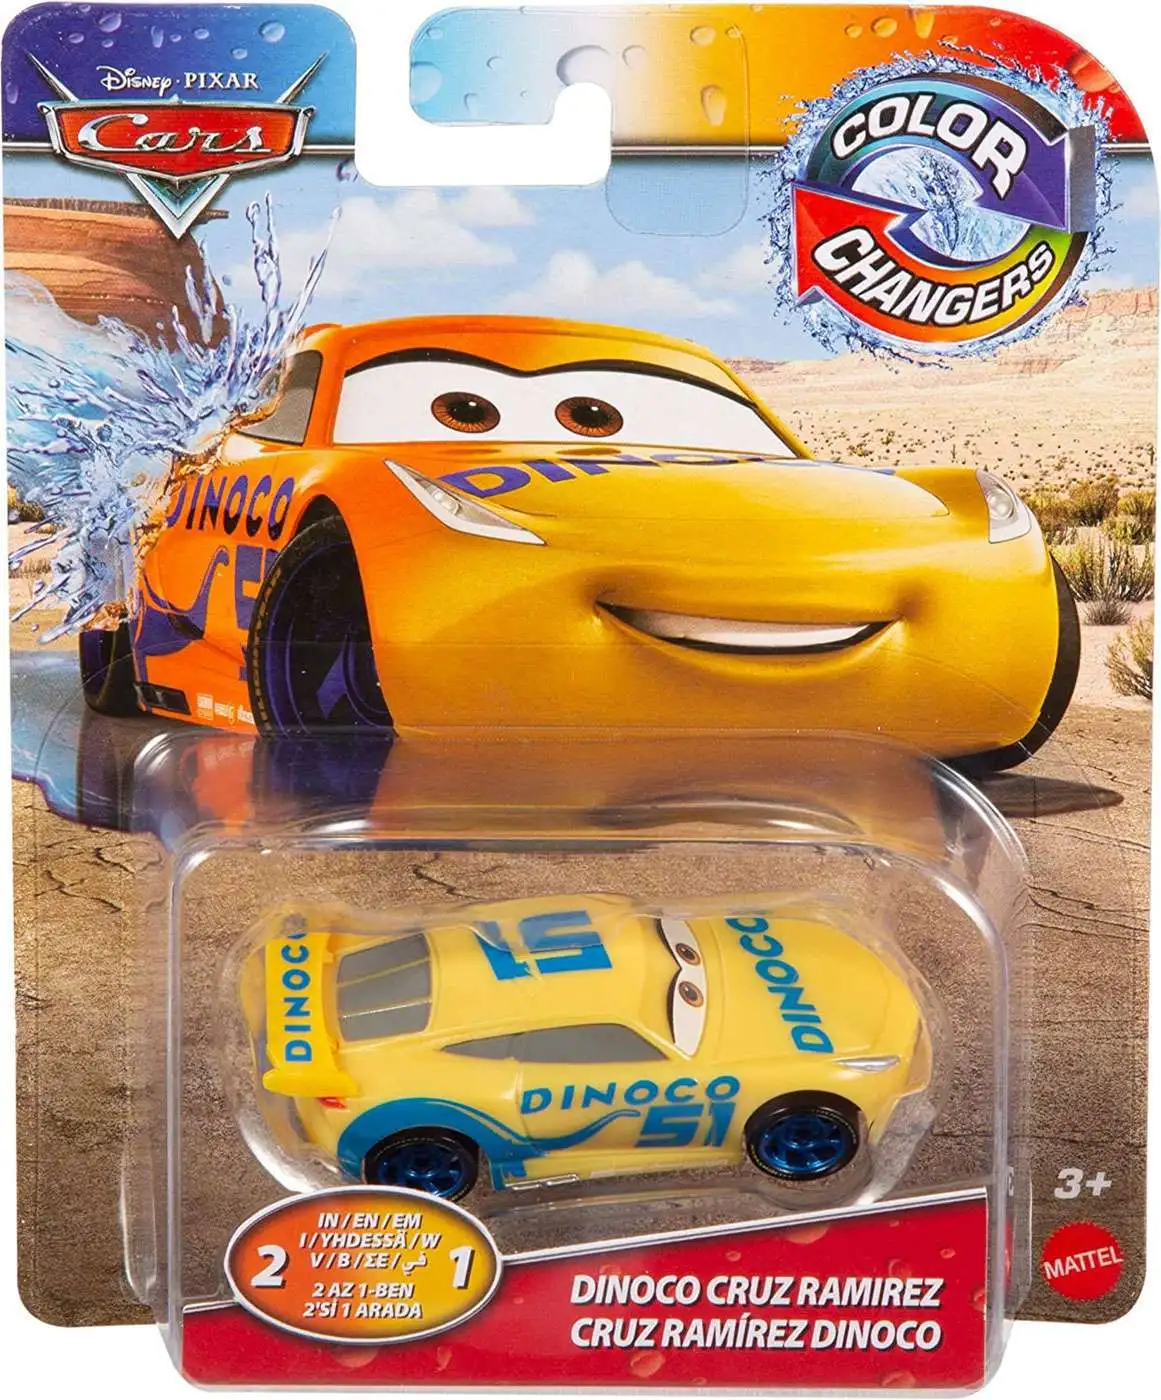 Disney Pixar Cars 3 Cruz Ramirez Jackson Hauler Truck 1:55 Diecast Model Car Toy 